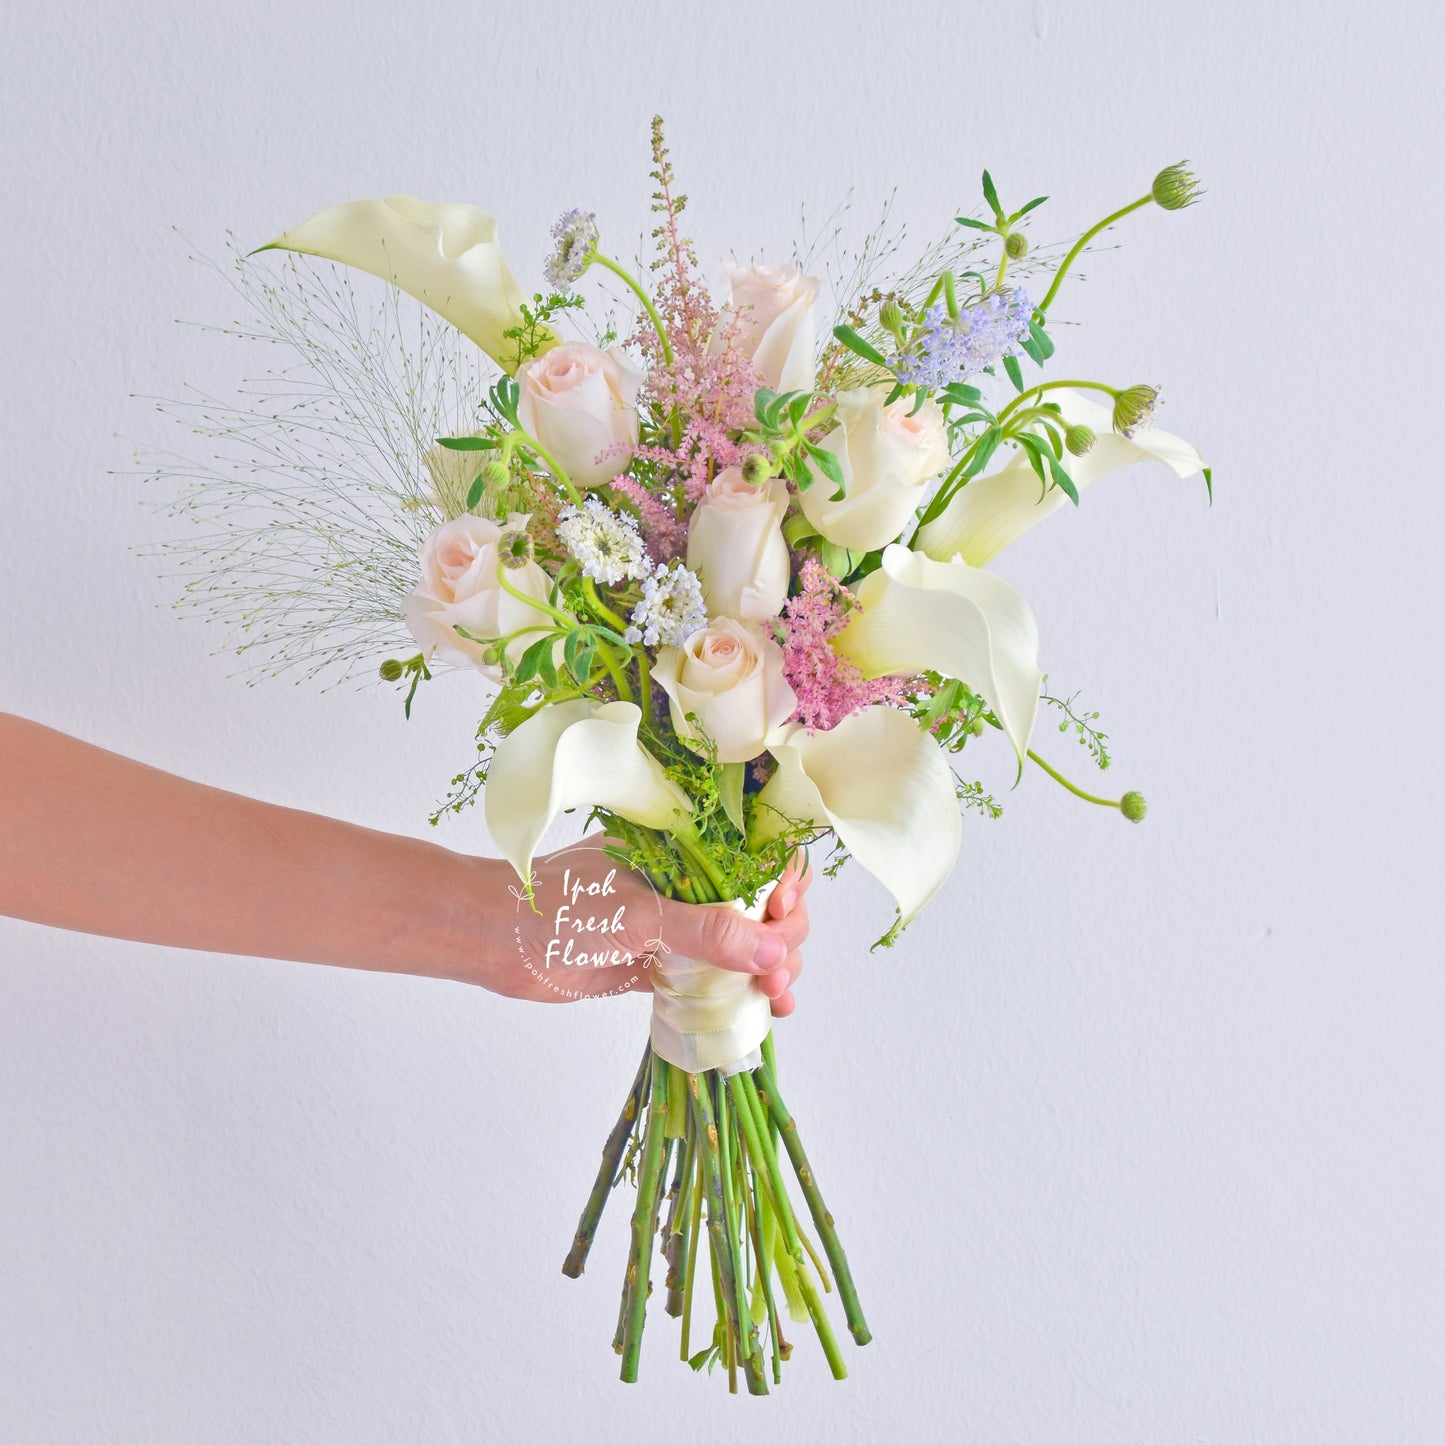 Julie Cala lilies Bridal Bouquet| Personalized Flower Bouquet For Wedding & ROM